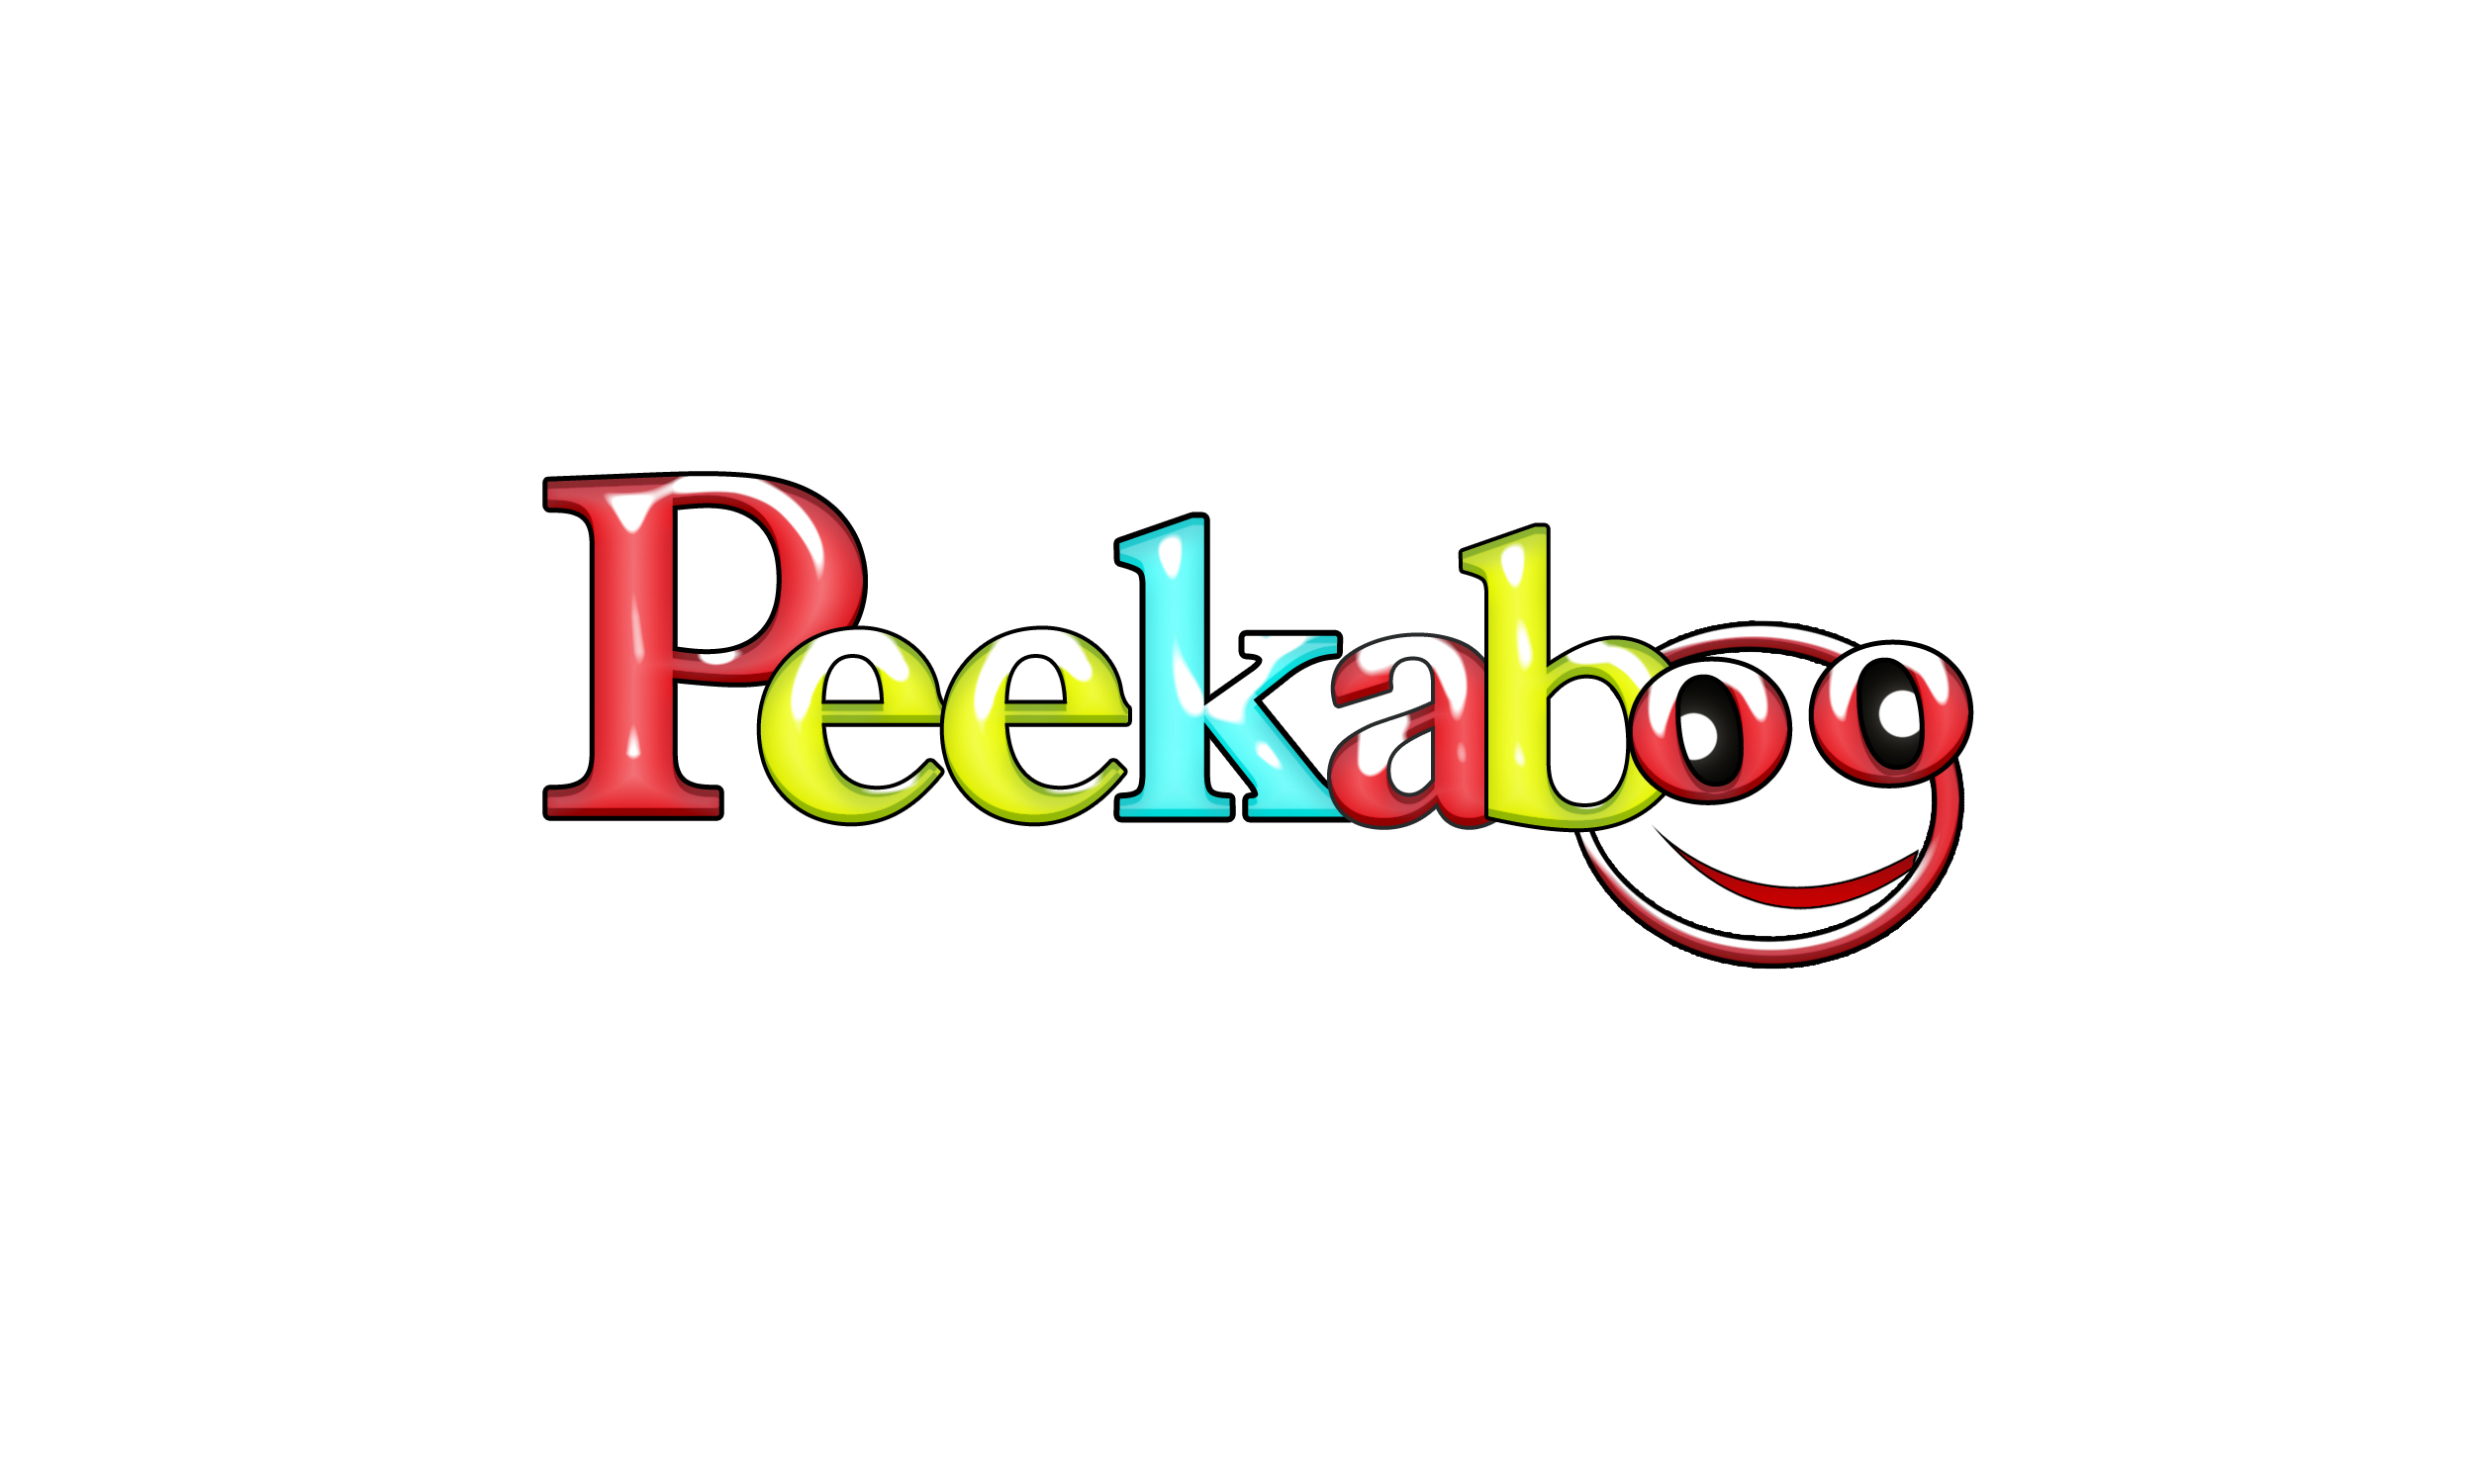 Peekaboo logo 2